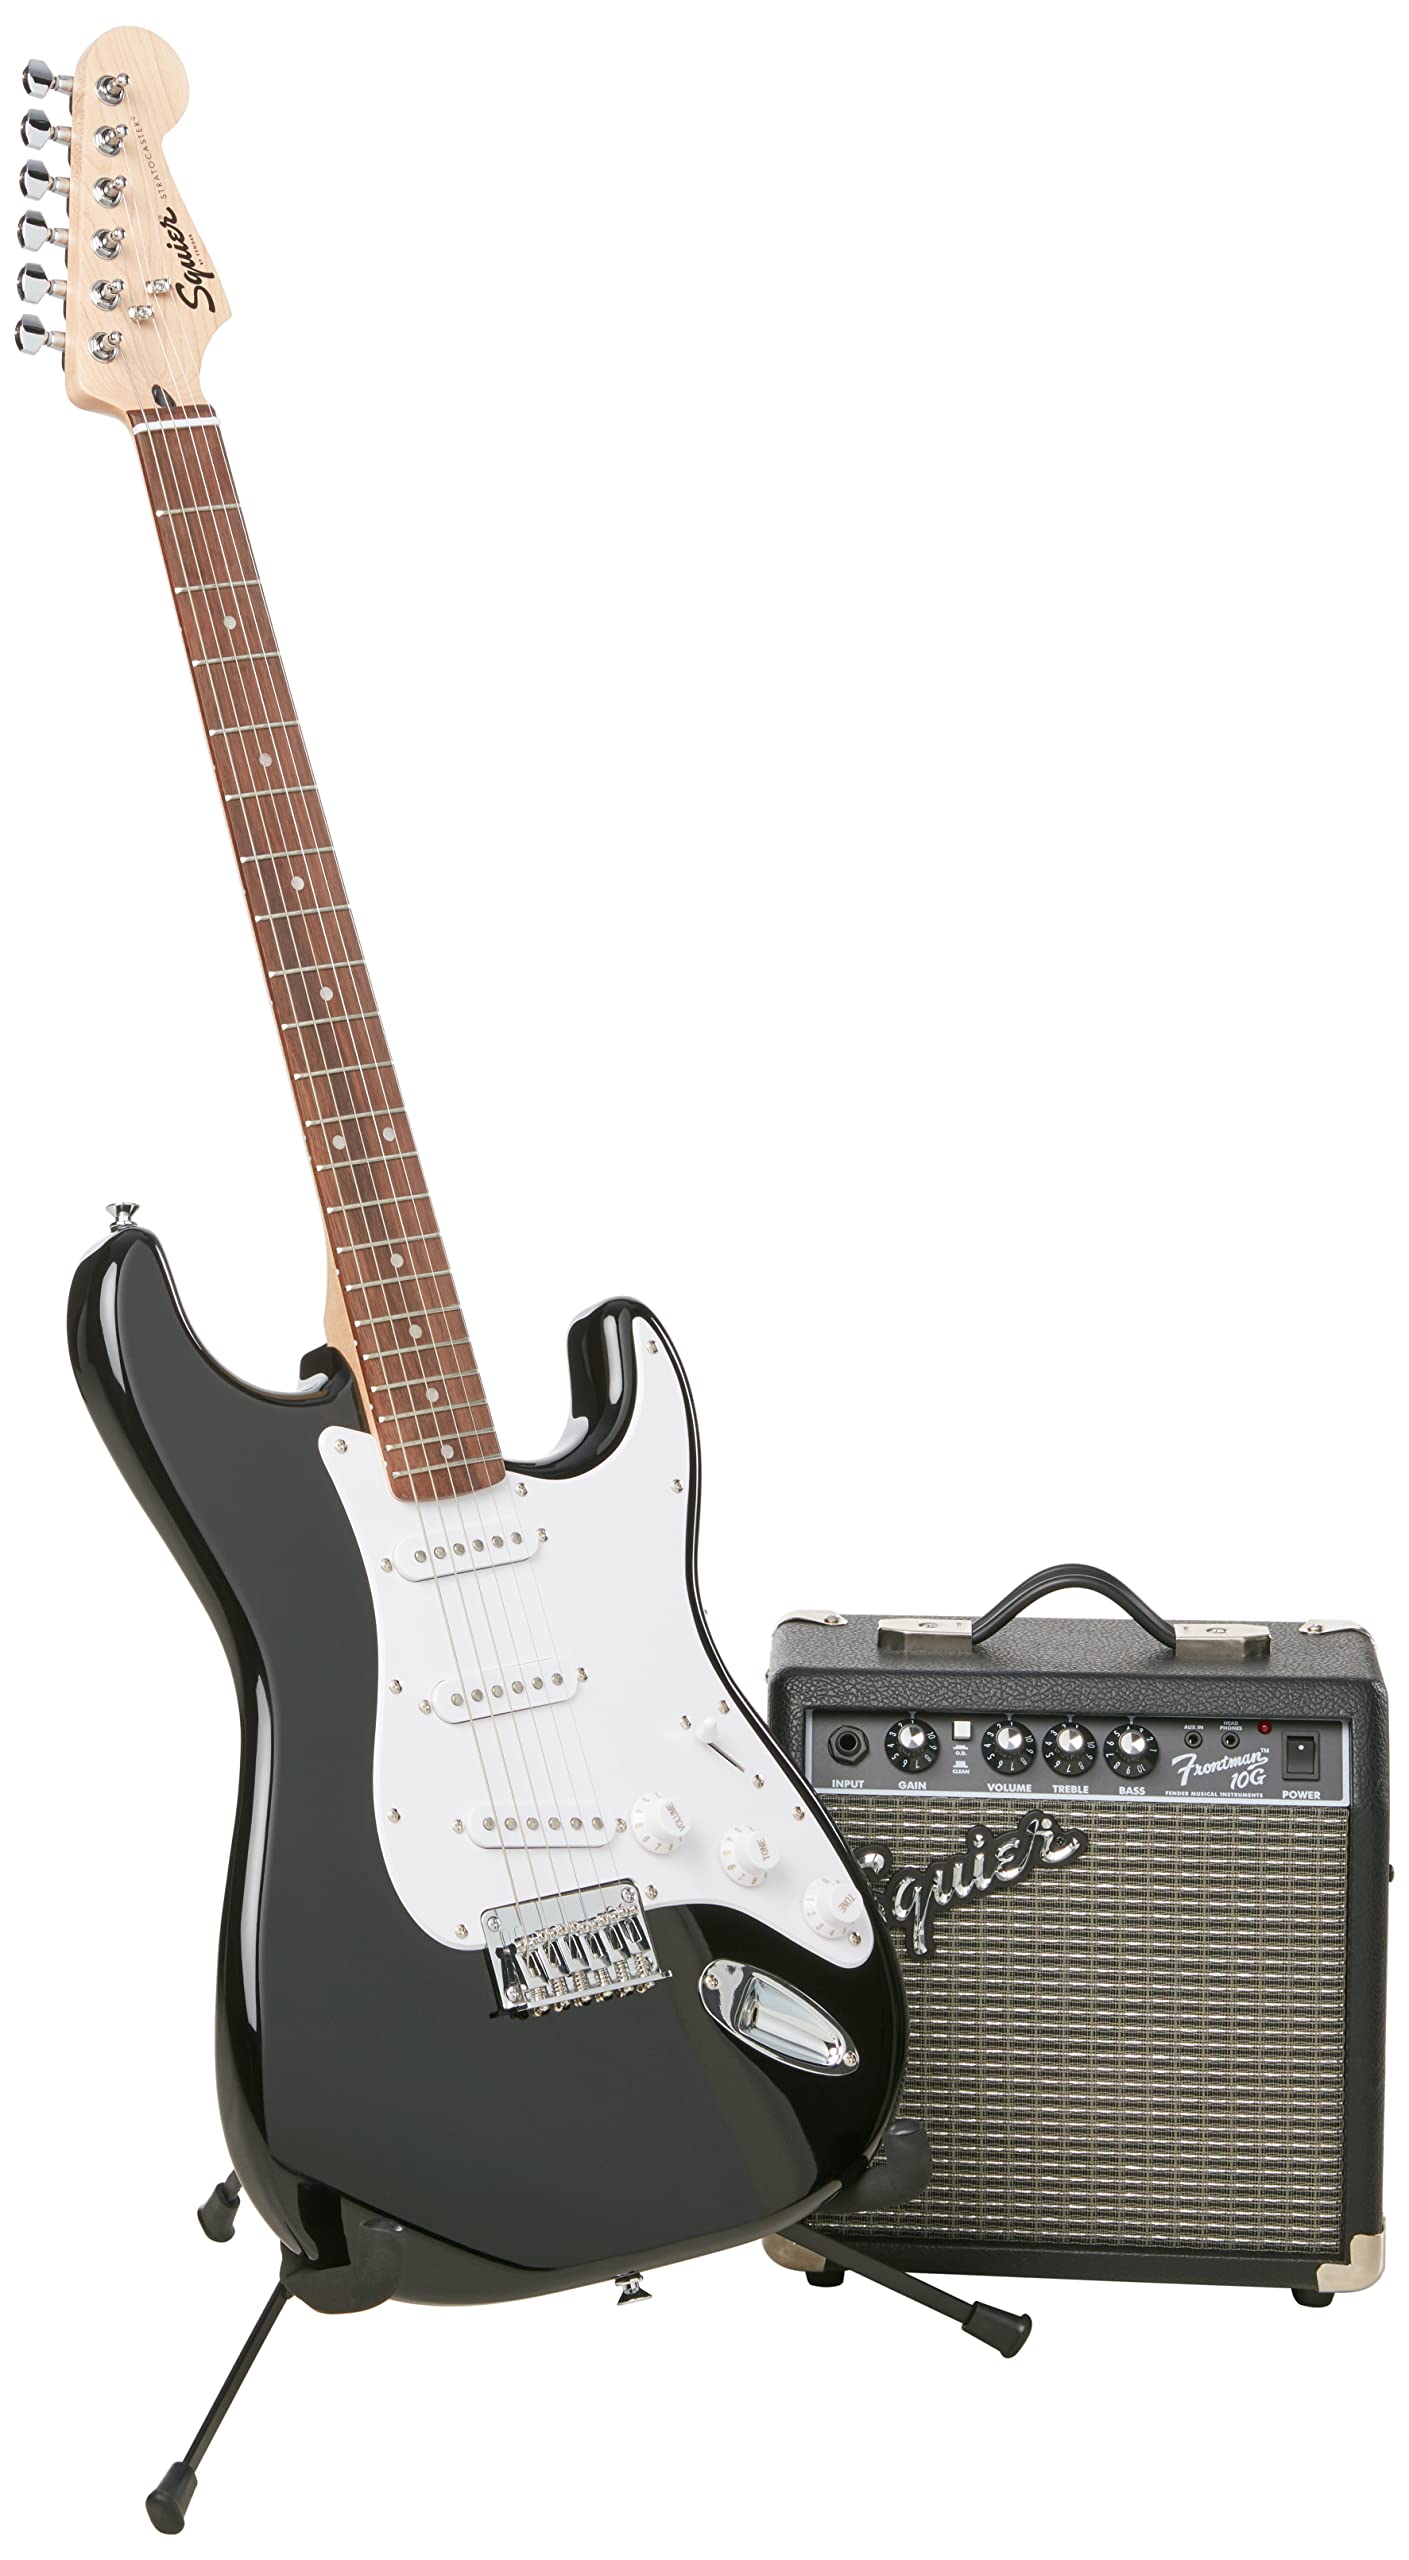 Squier Stratocaster 电吉他初学者入门包，黑色，Laurel 指板，包括 Frontman 10G 吉他放大器、加垫琴包、线缆、背带等